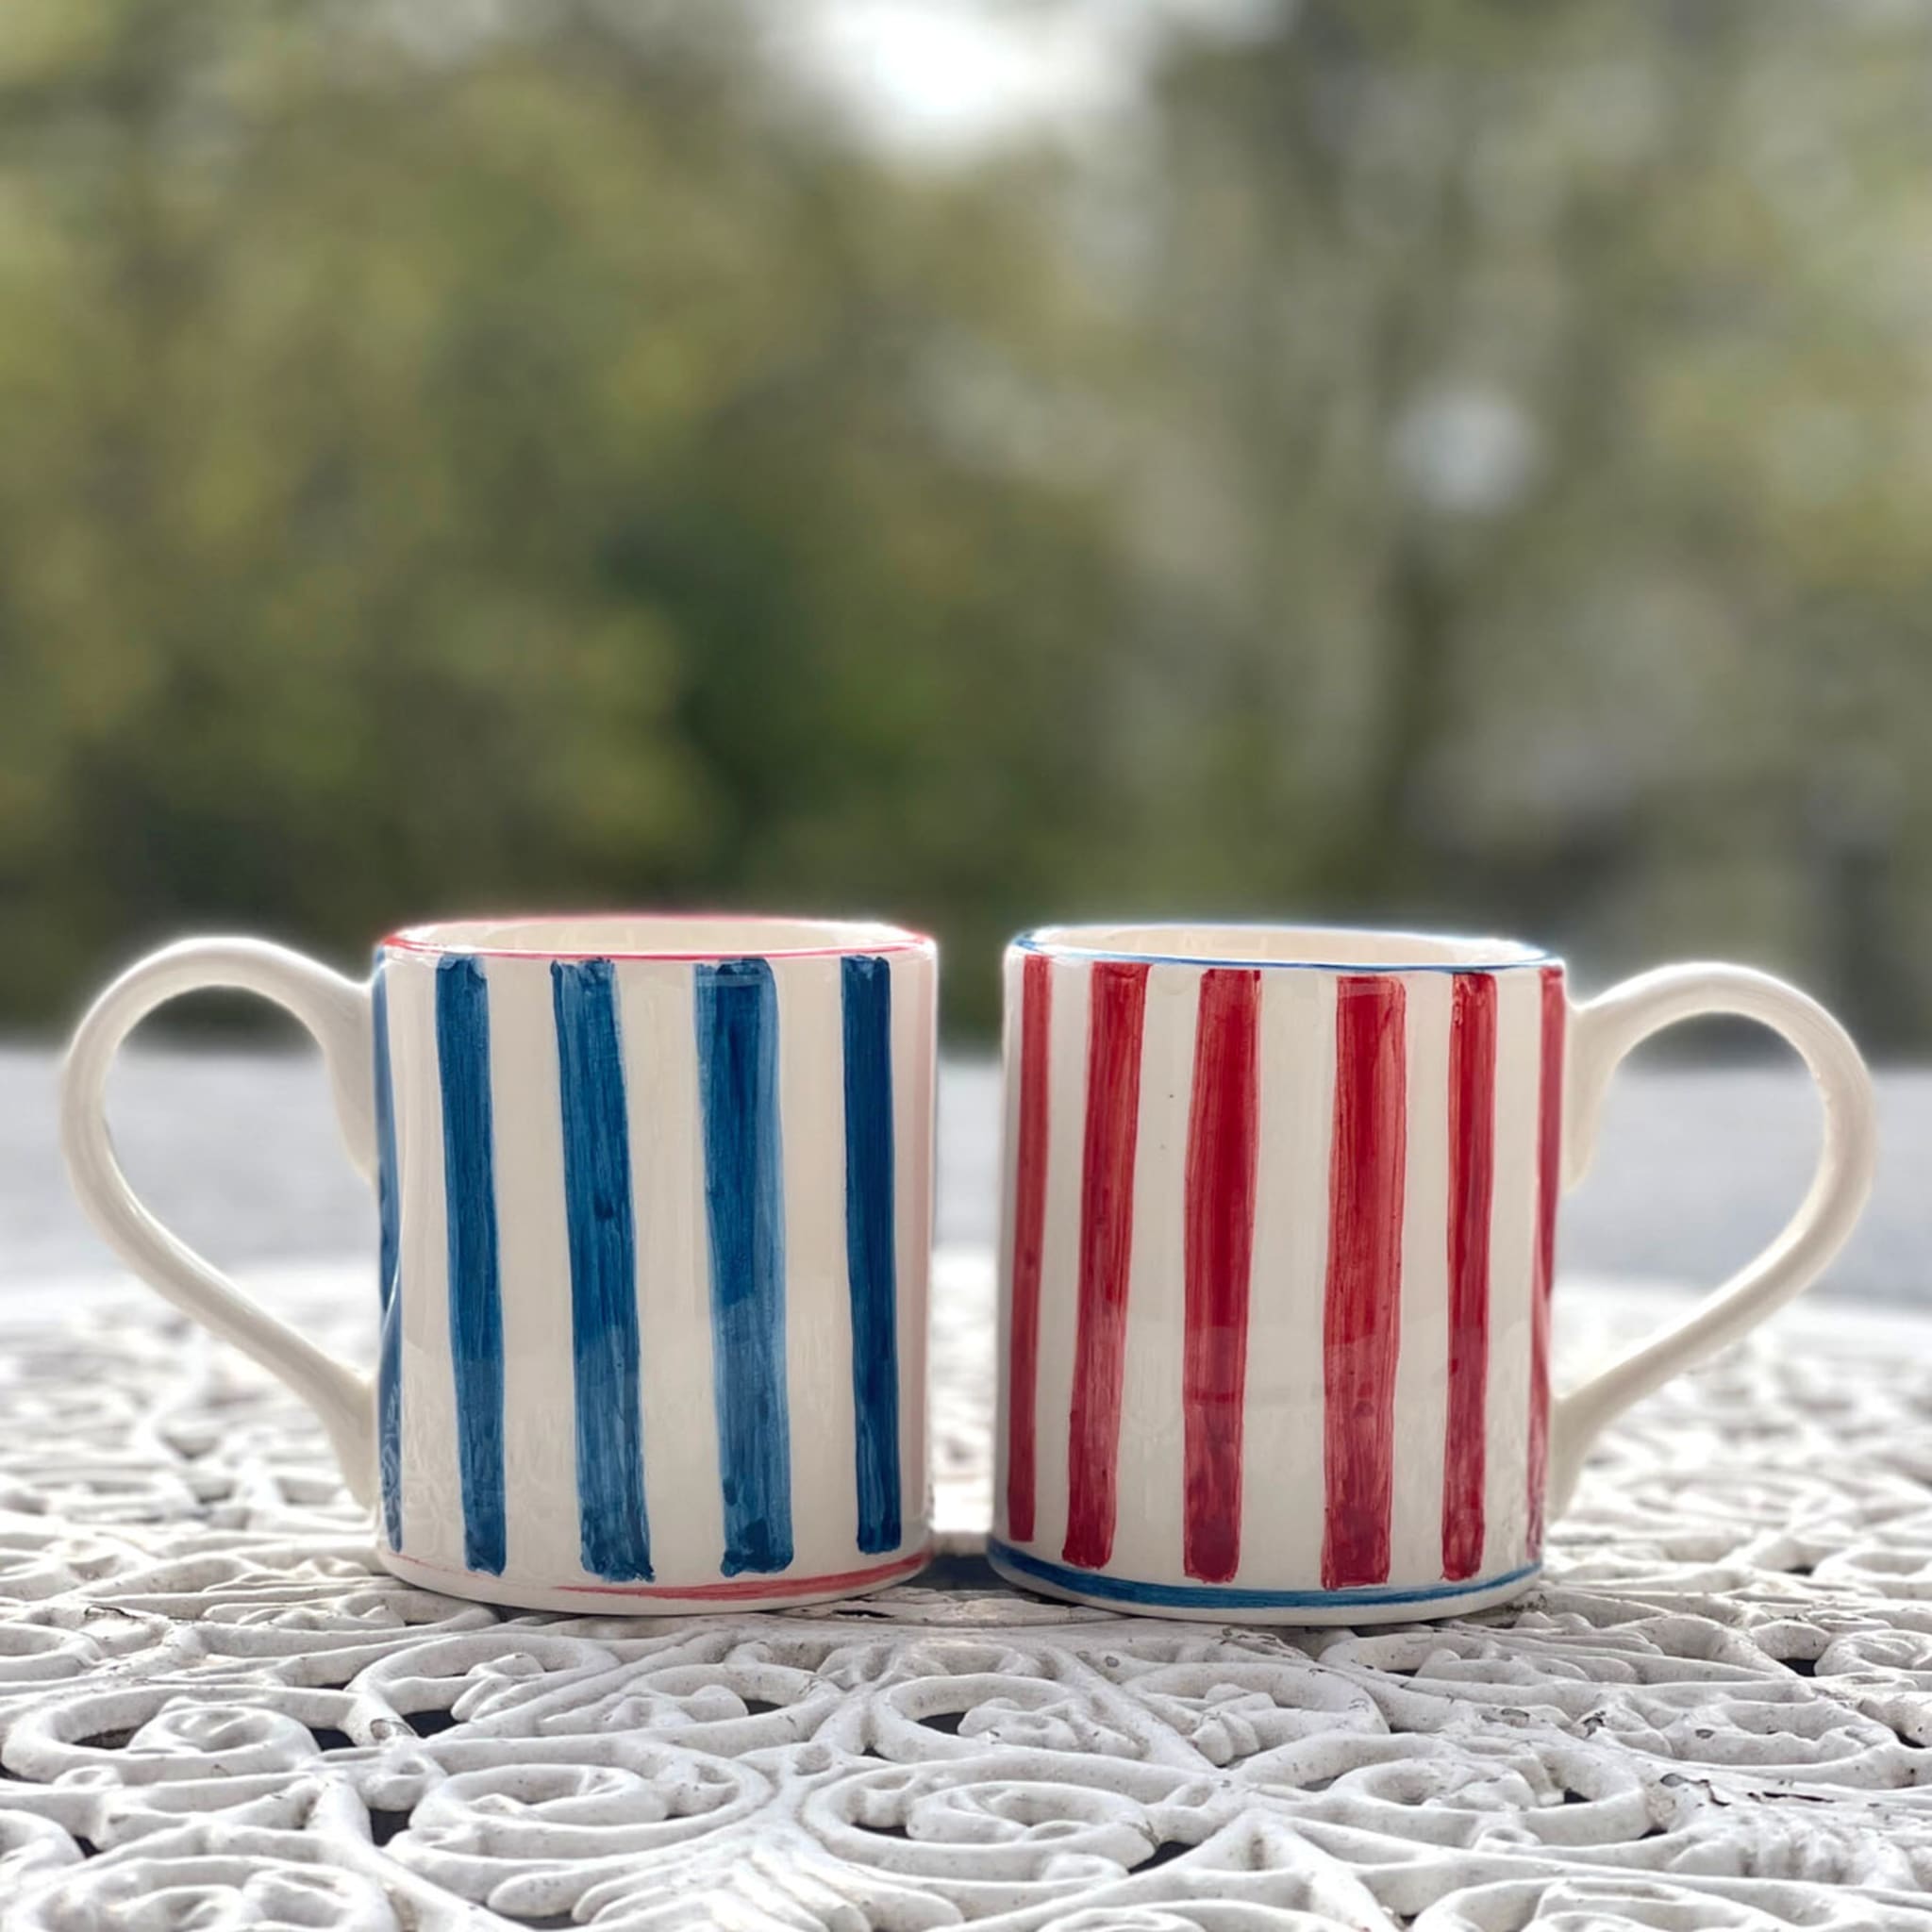 Set of 6 Ceramic Red and Blue Mugs - Alternative view 1